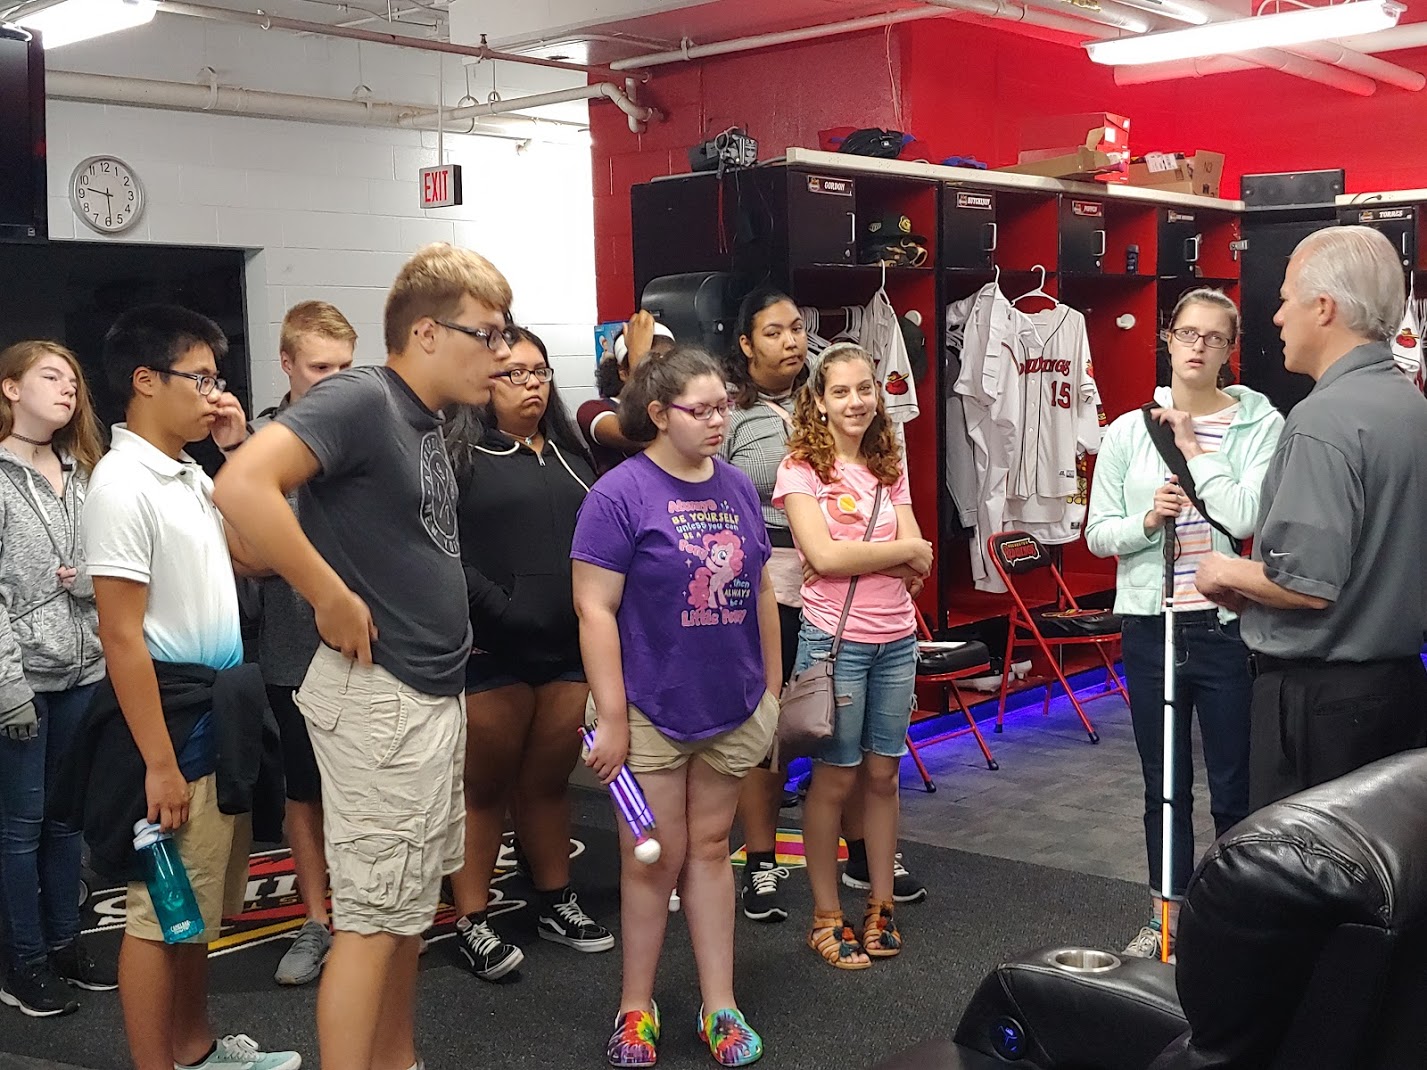 Visiting the Red Wings locker room.